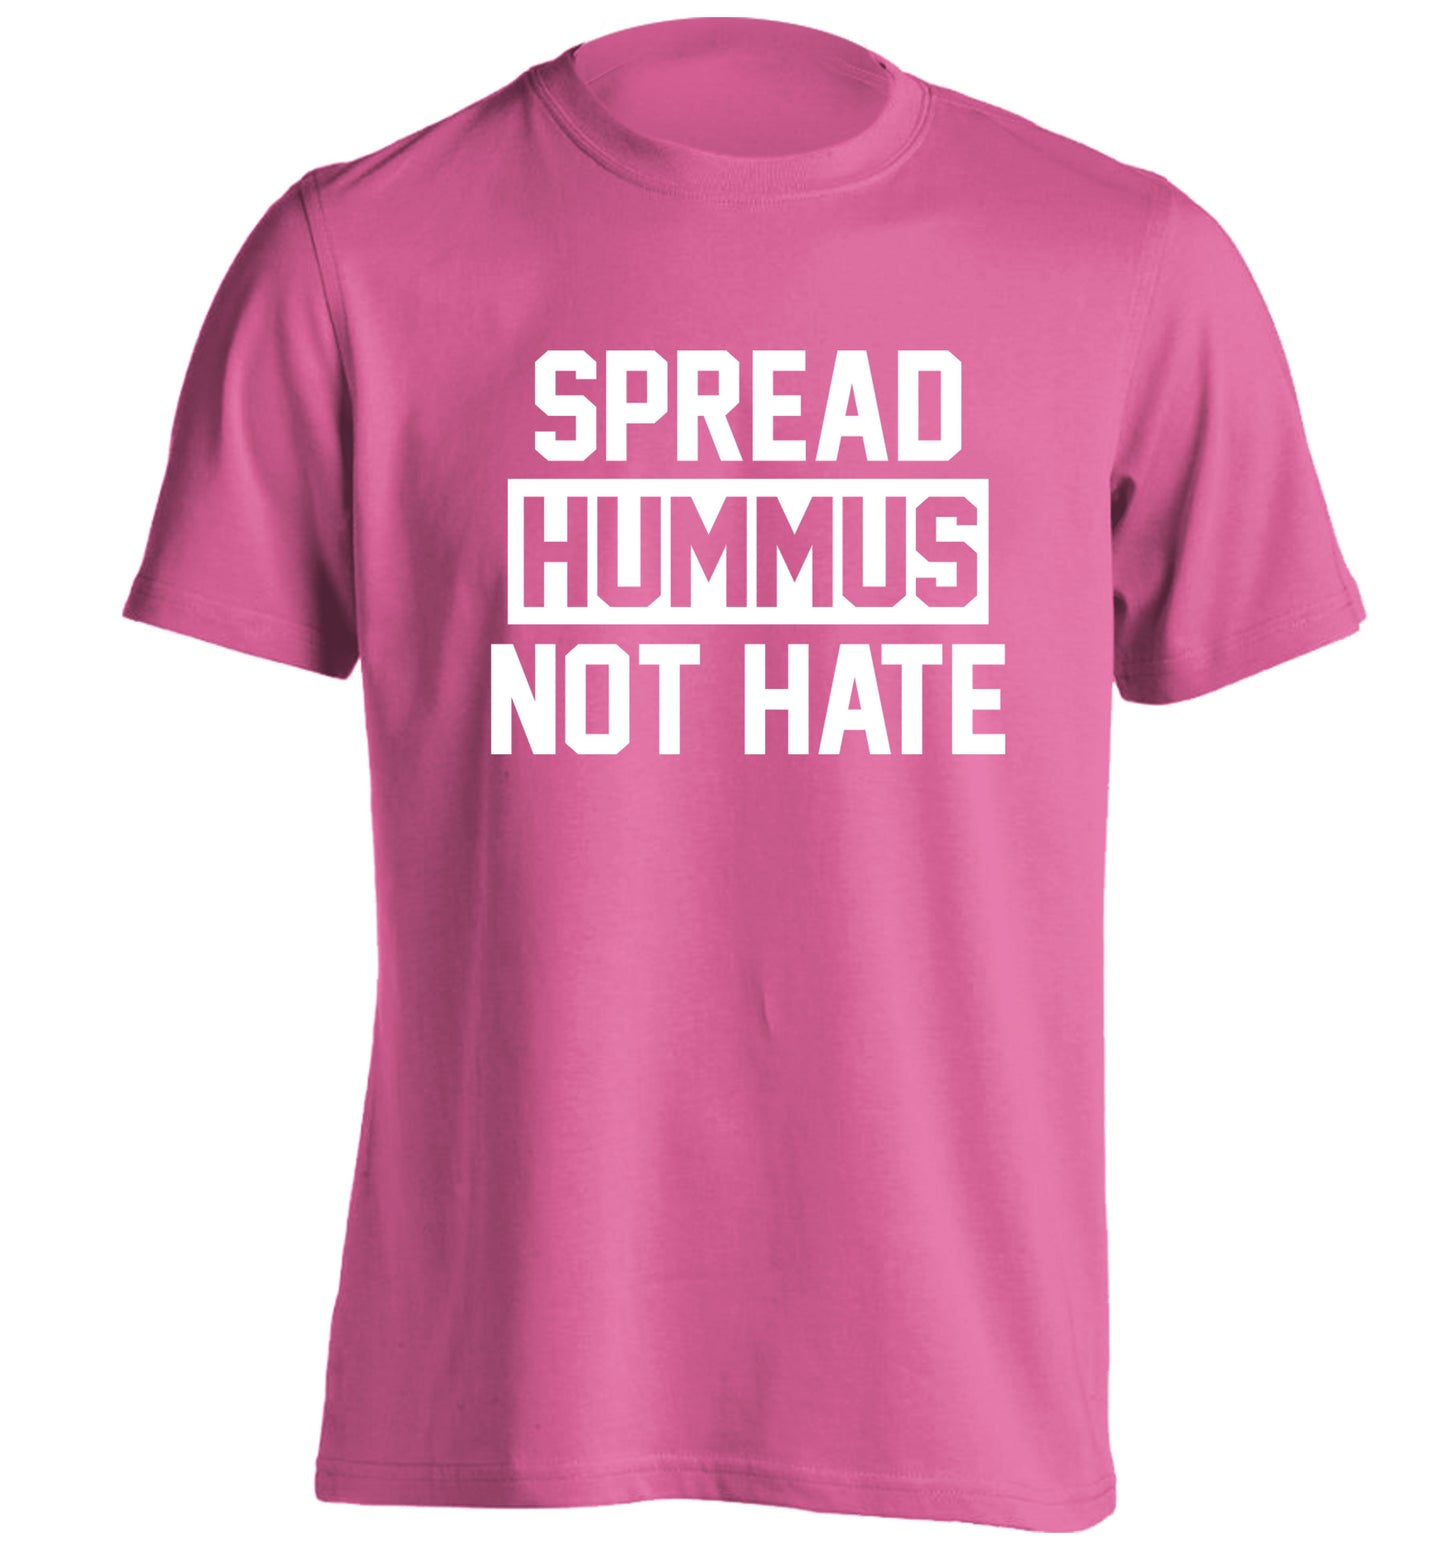 Spread hummus not hate adults unisex pink Tshirt 2XL